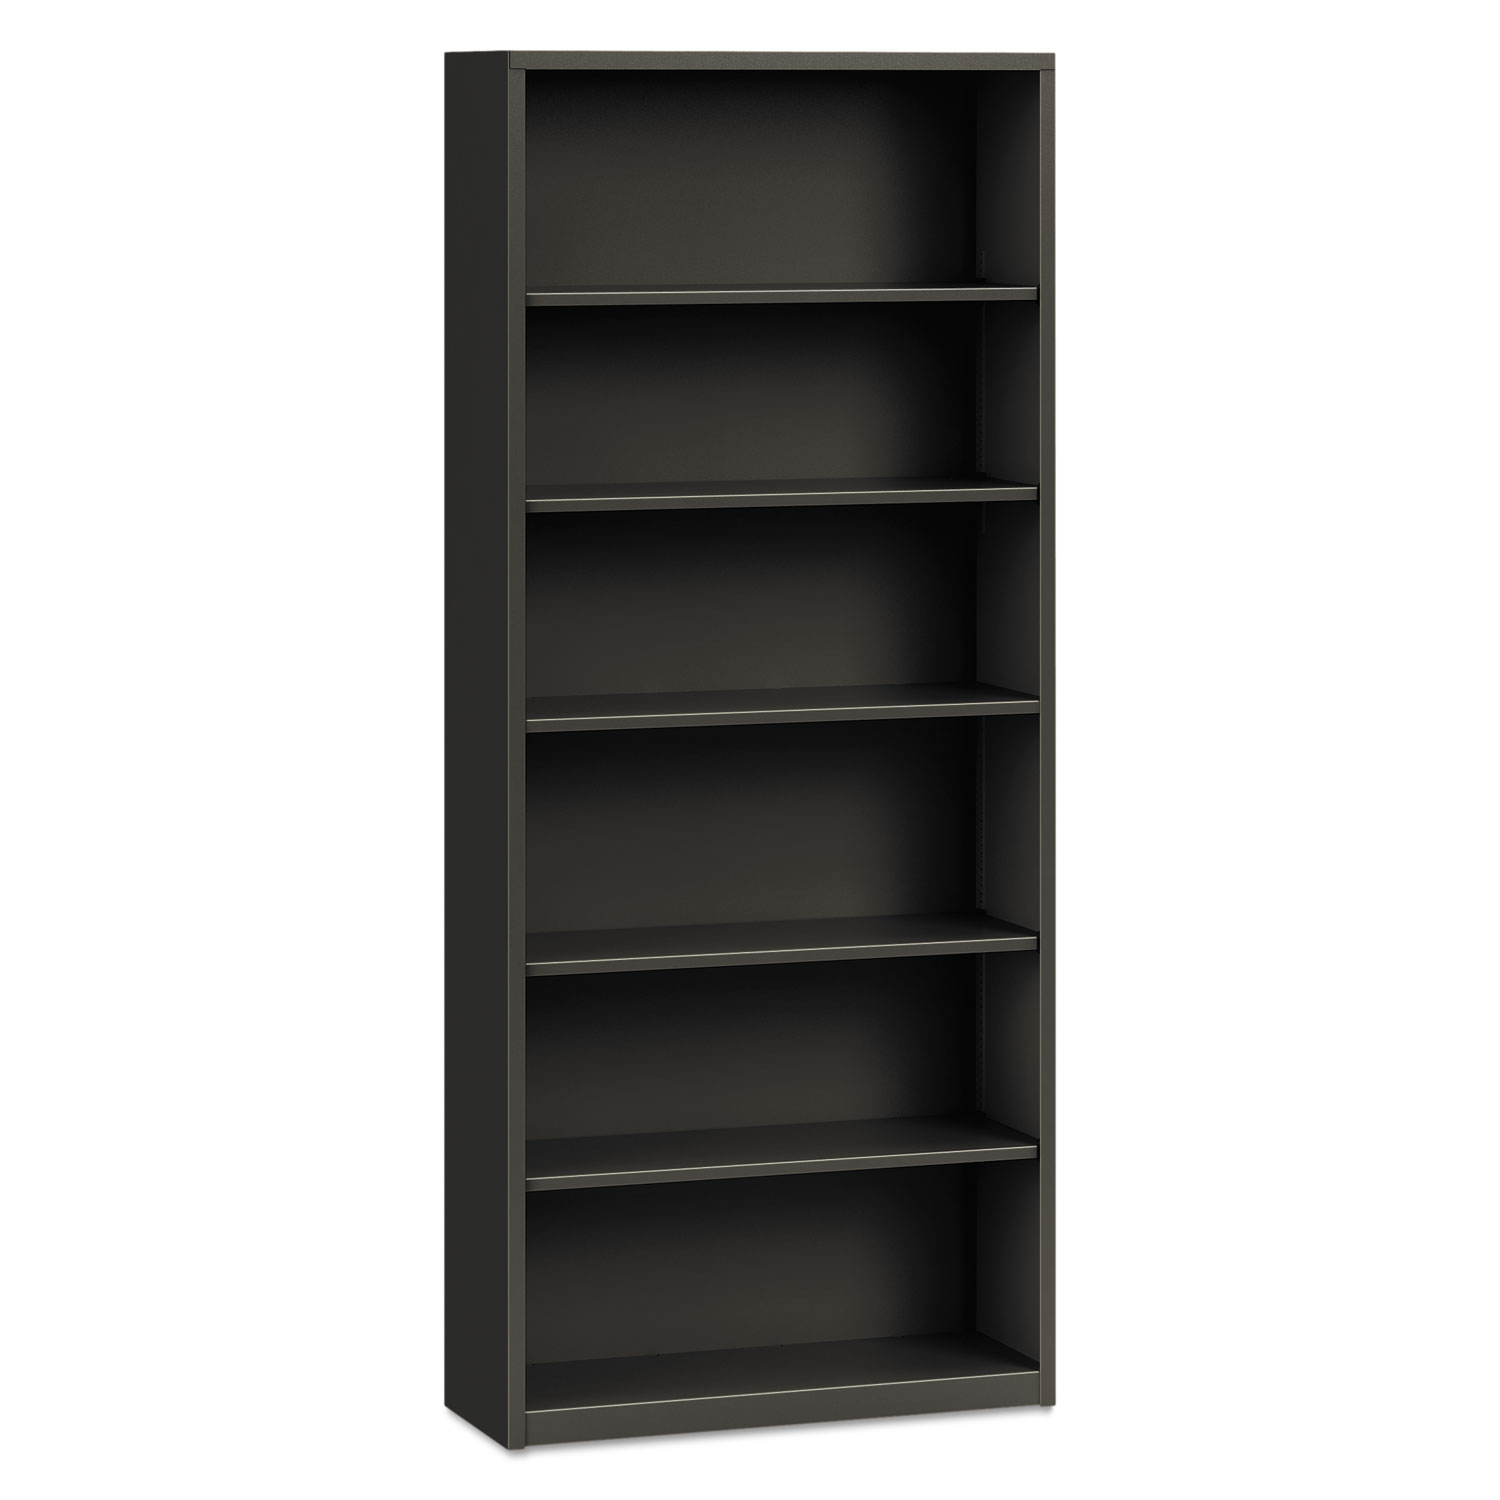  HON HS82ABC.S Metal Bookcase, Six-Shelf, 34-1/2w x 12-5/8d x 81-1/8h, Charcoal (HONS82ABCS) 